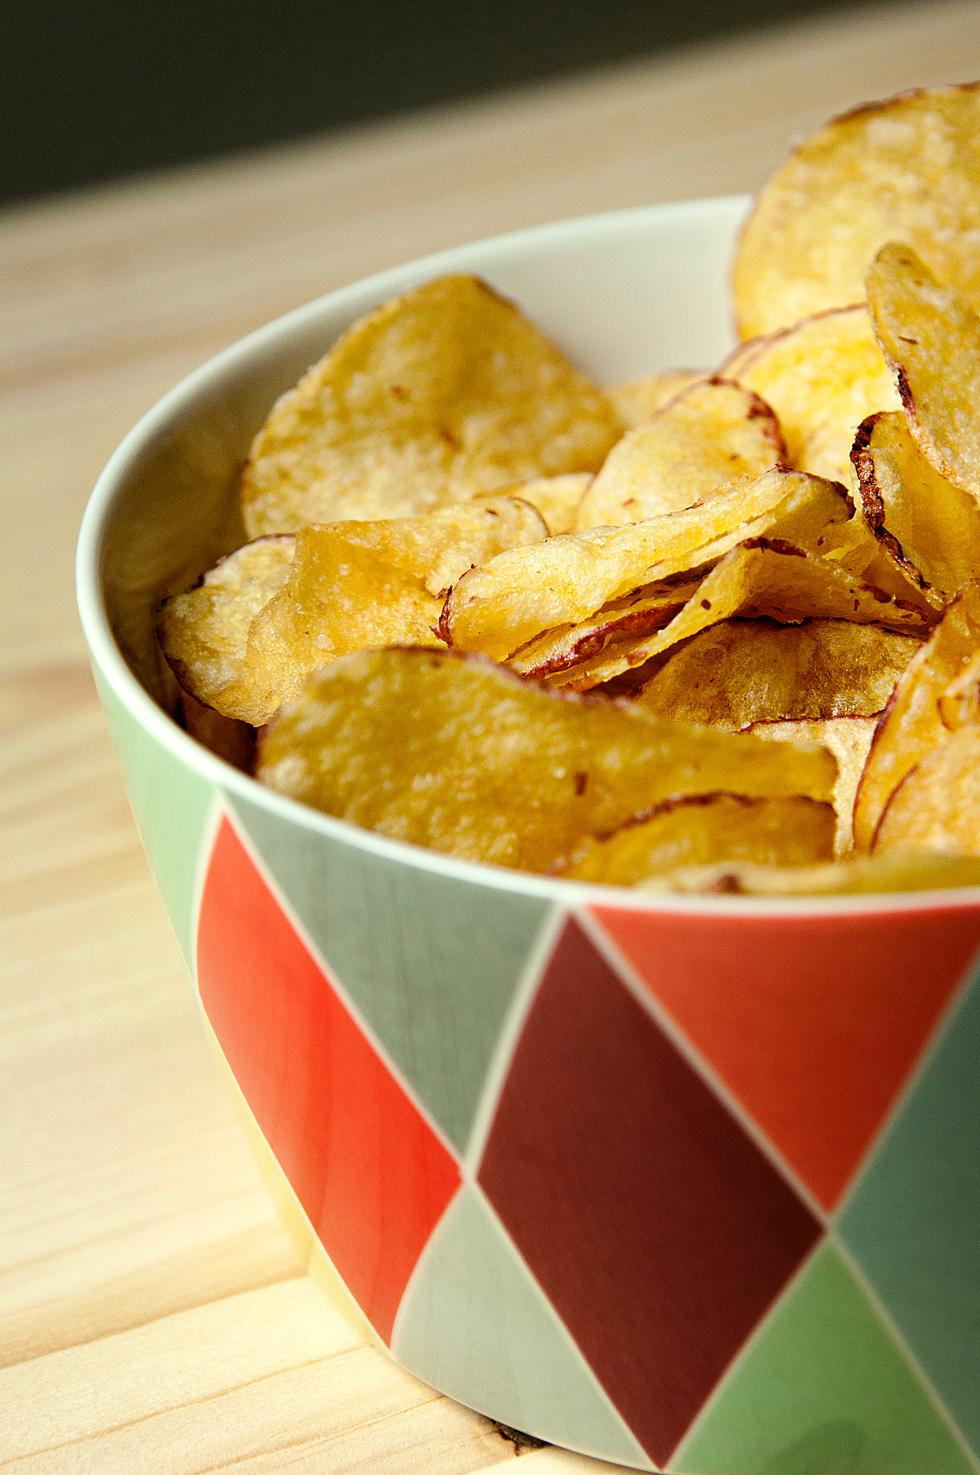 Southern Utah's Homemade Potato Chip Options